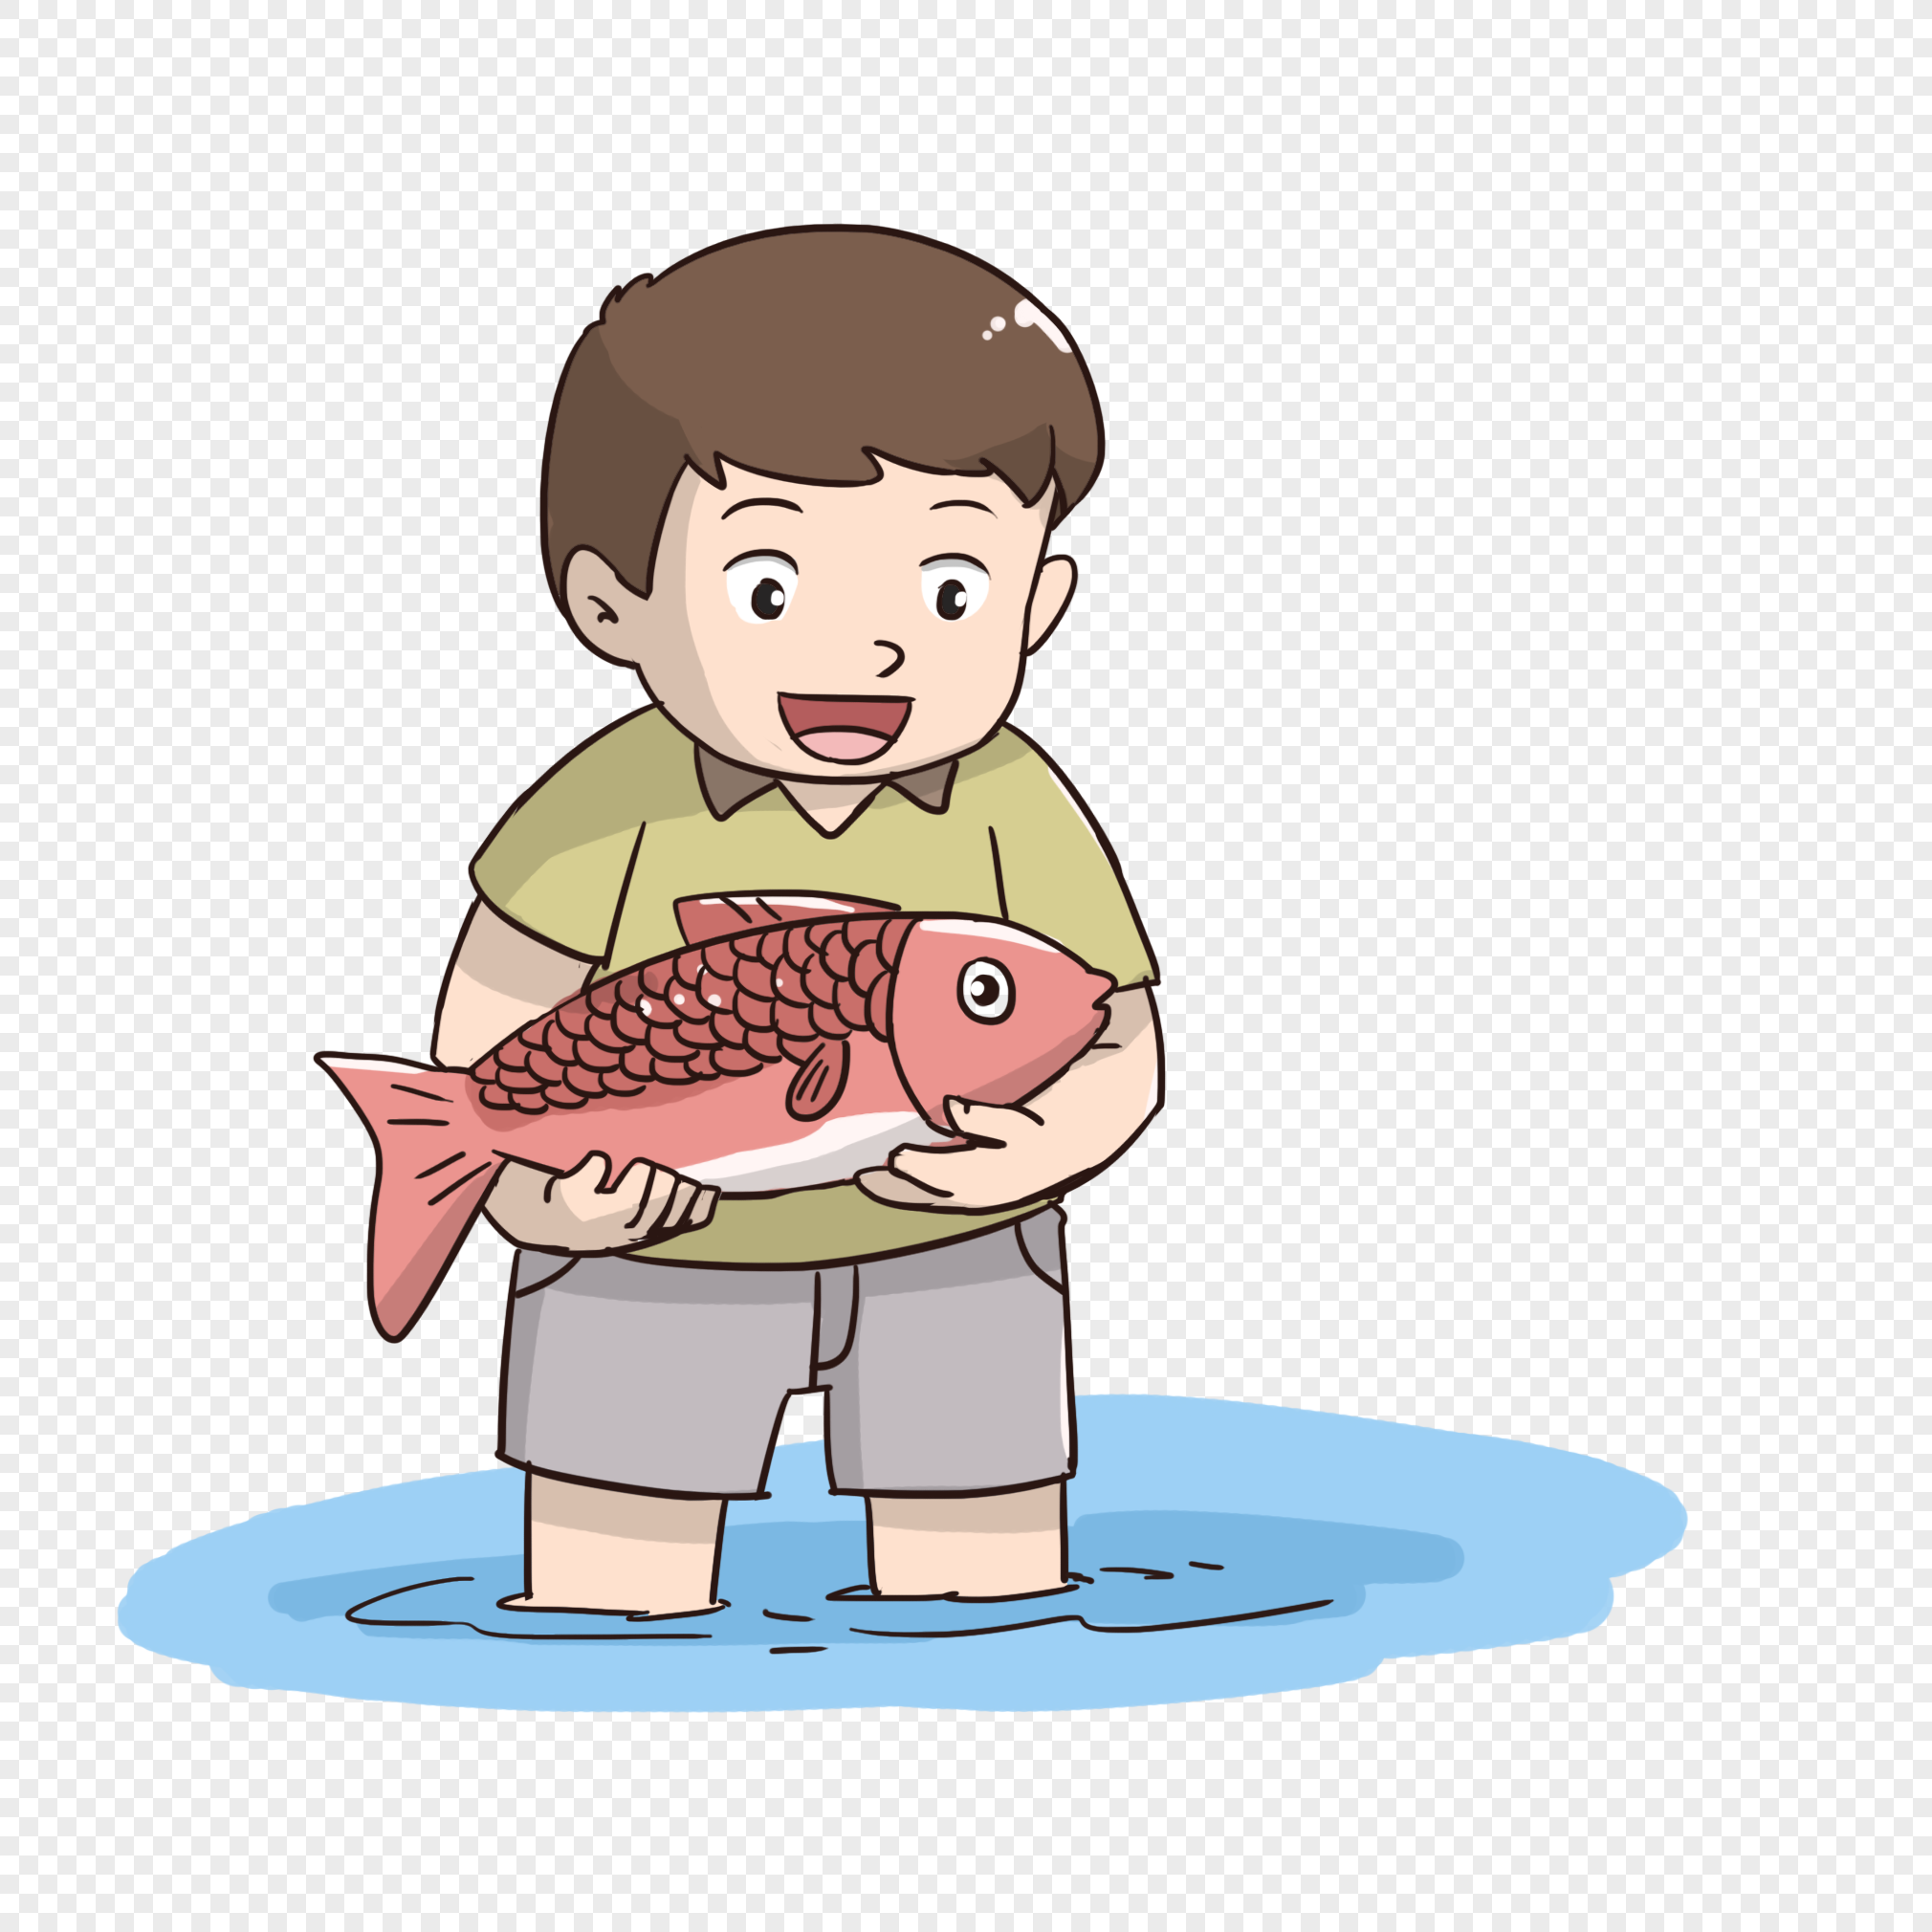 Free Vectors  A boy who came fishing a fish (hand-drawn)